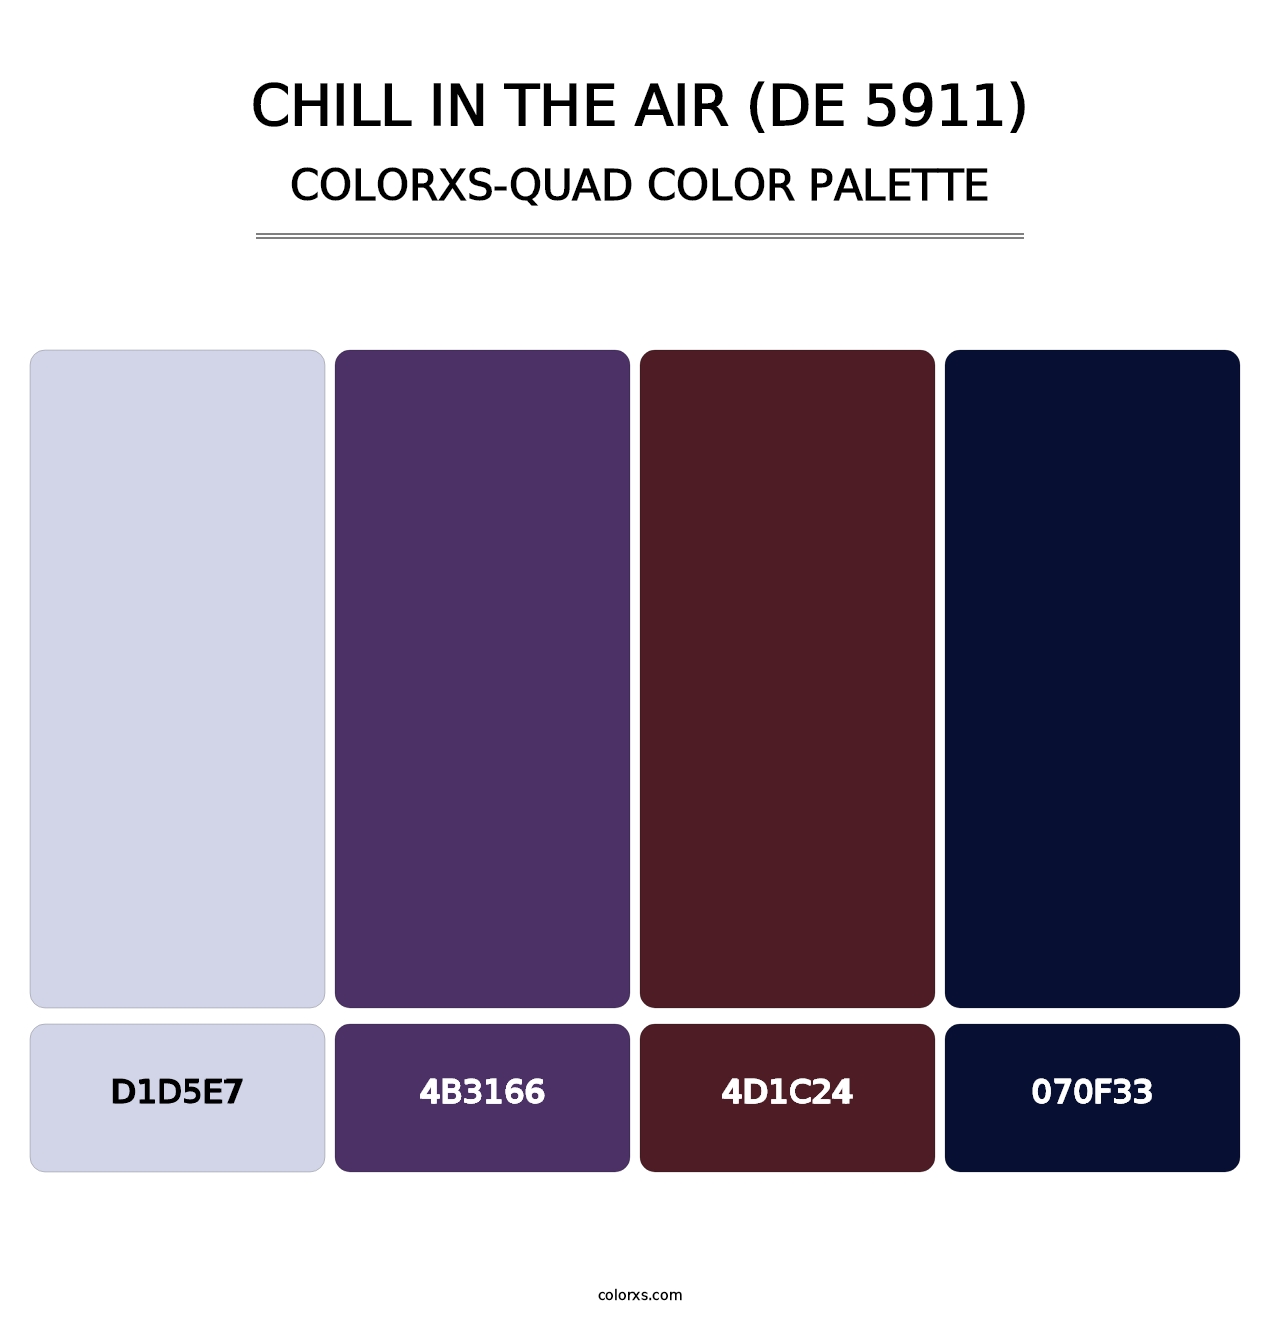 Chill in the Air (DE 5911) - Colorxs Quad Palette